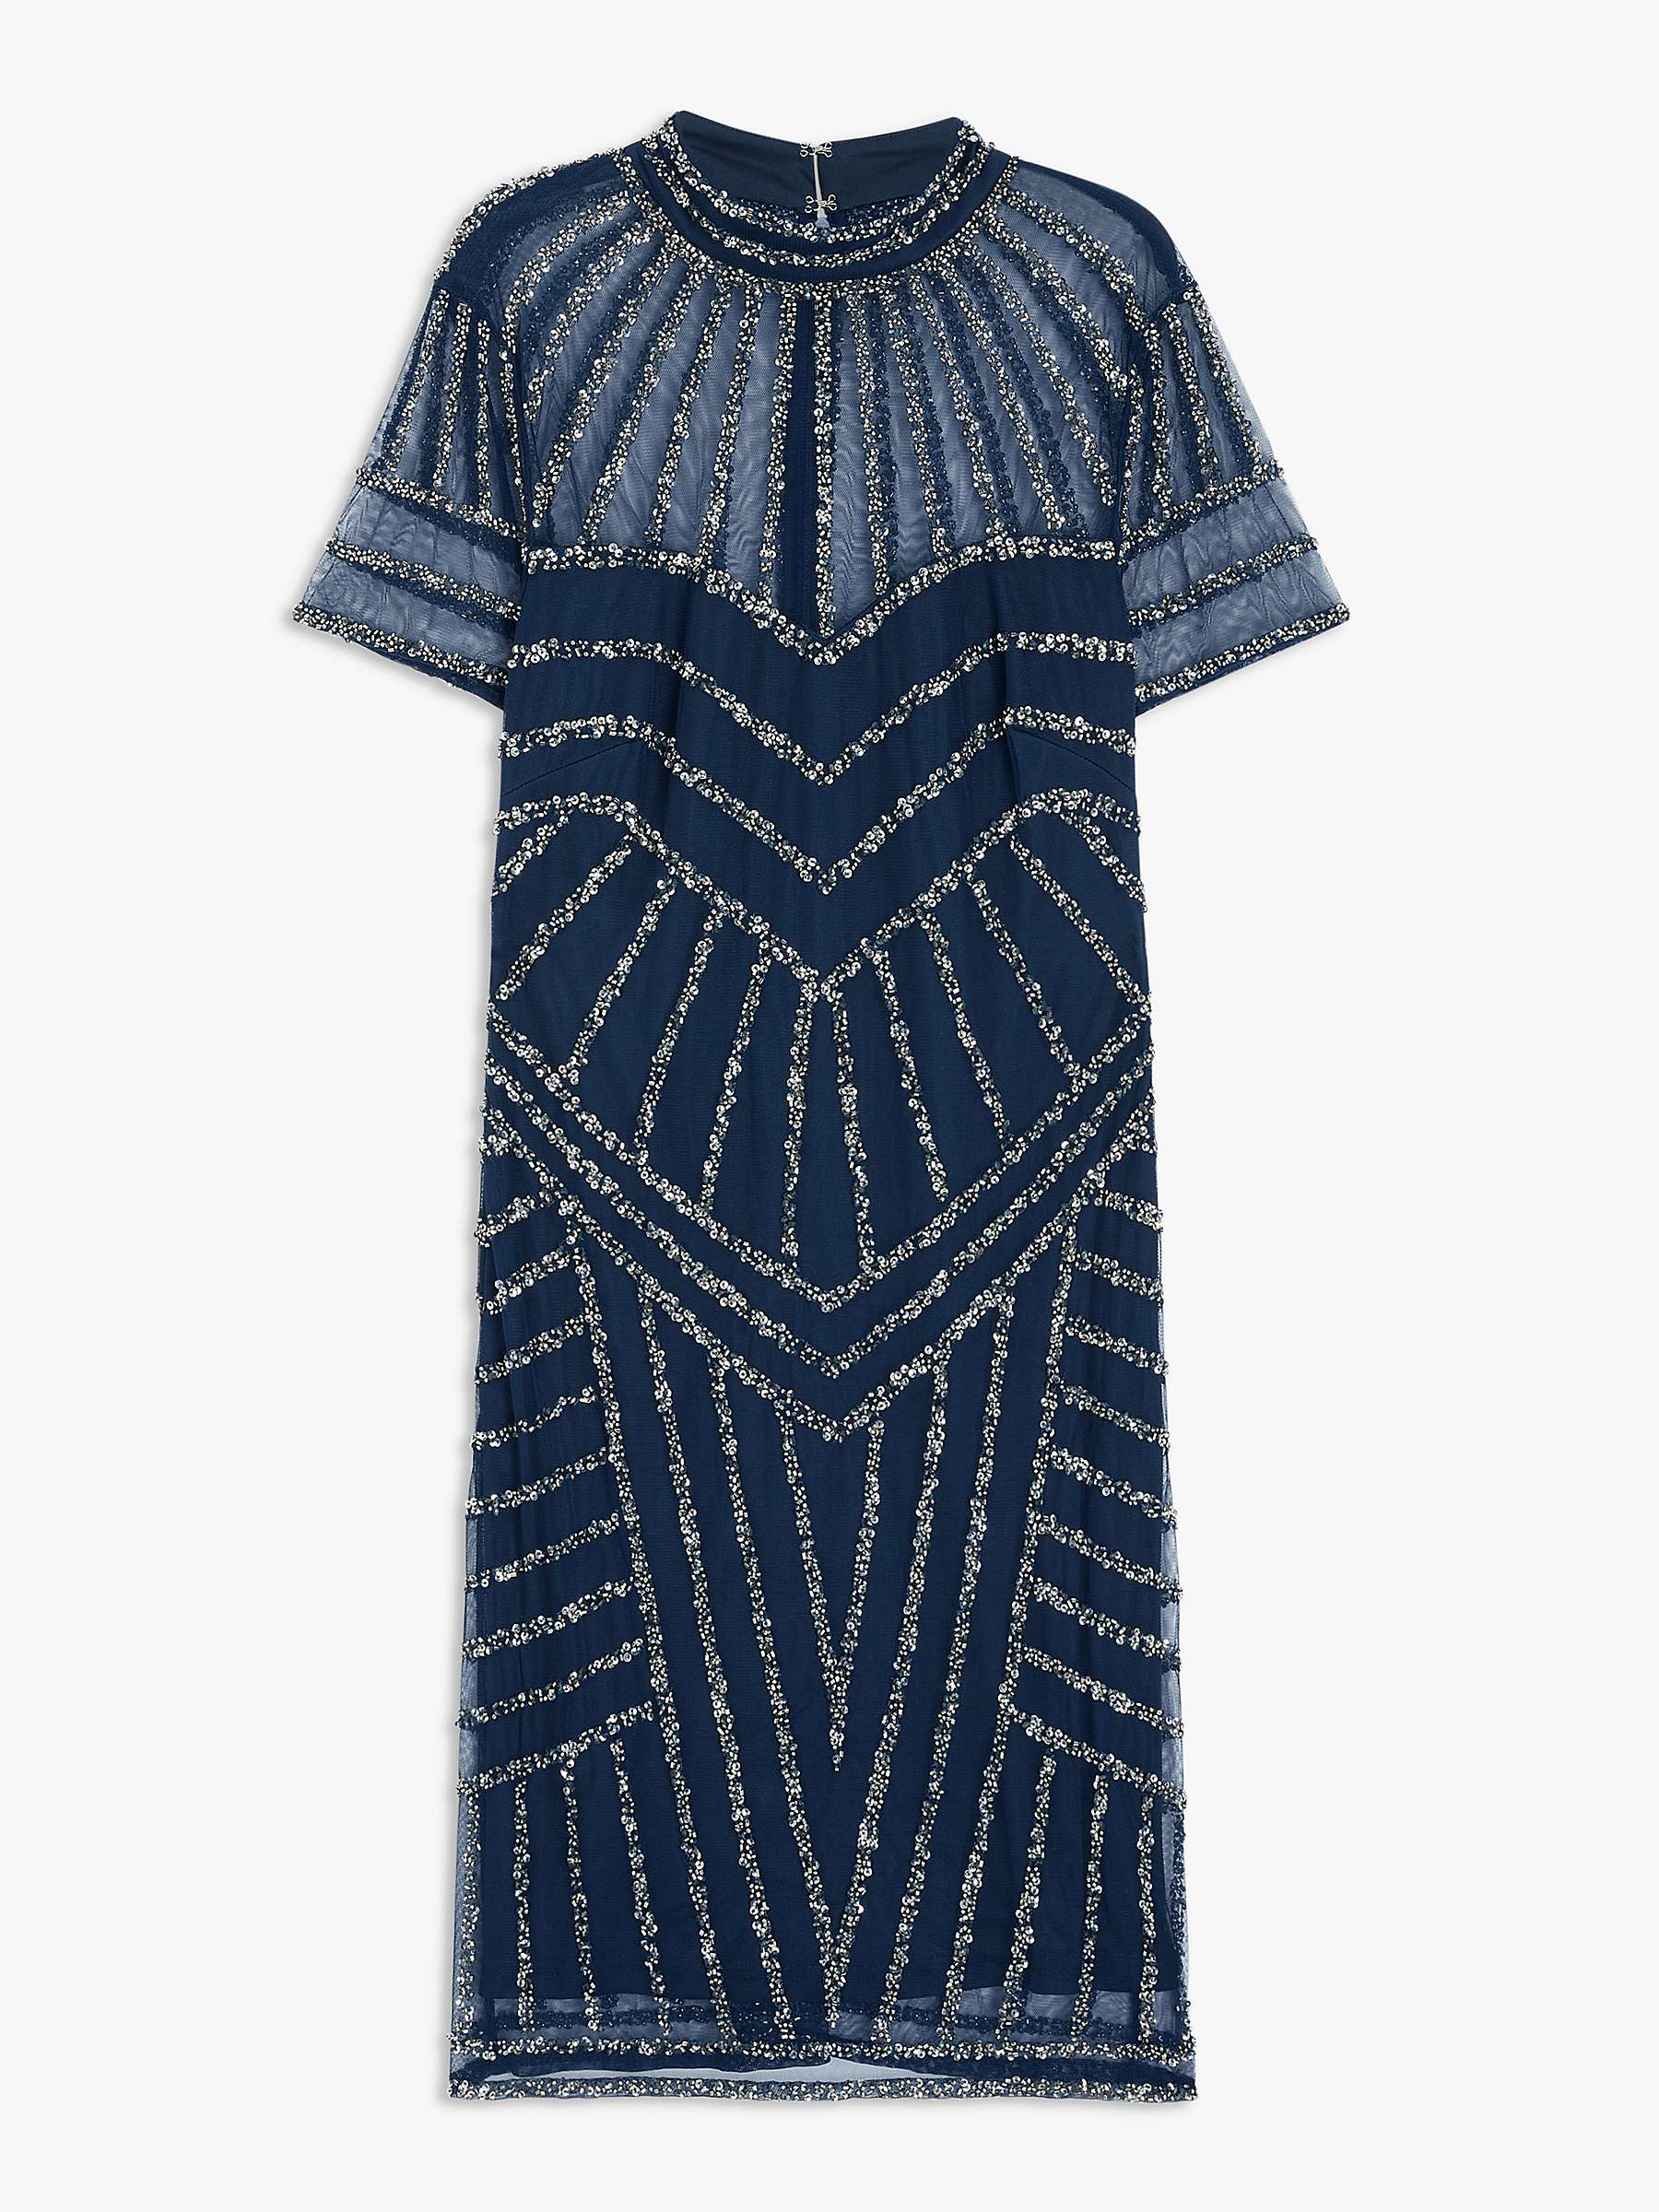 Buy Lace & Beads Marica Sequin Embellished Mini Dress, Dark Blue Online at johnlewis.com